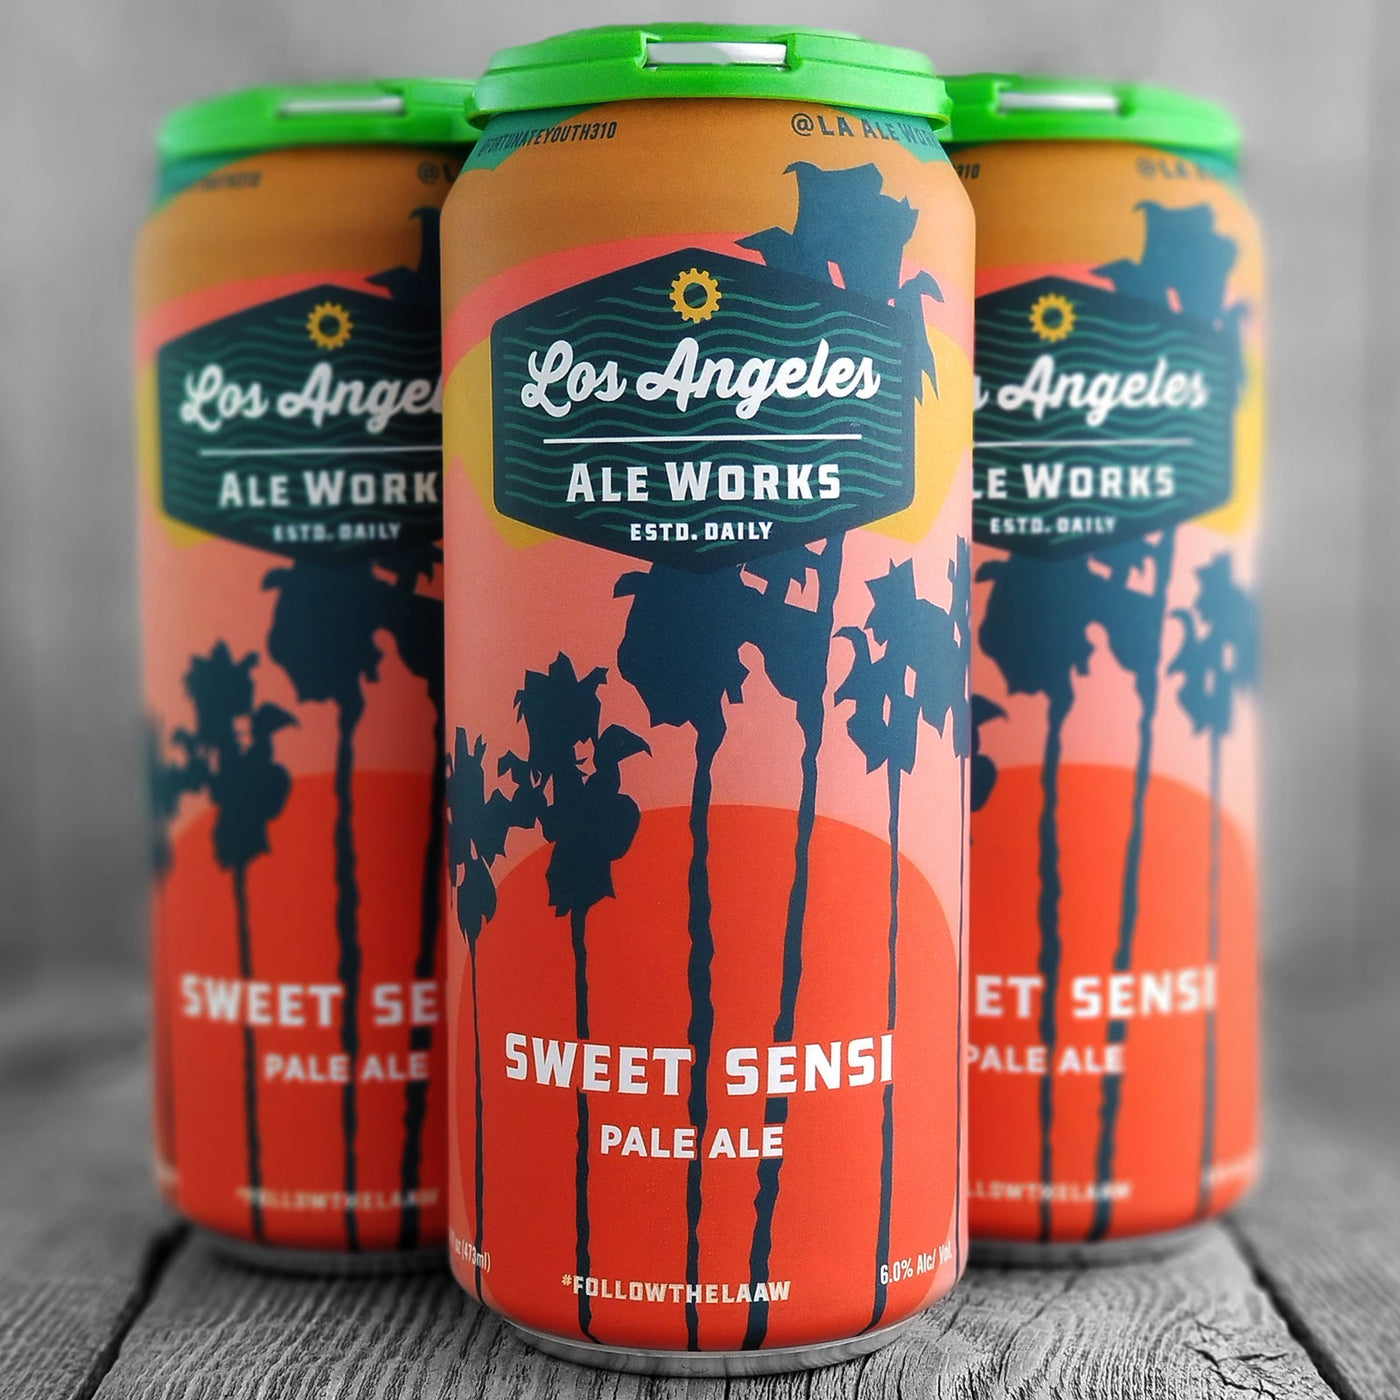 Los Angeles Ale Works / Fortunate Youth - Sweet Sensi